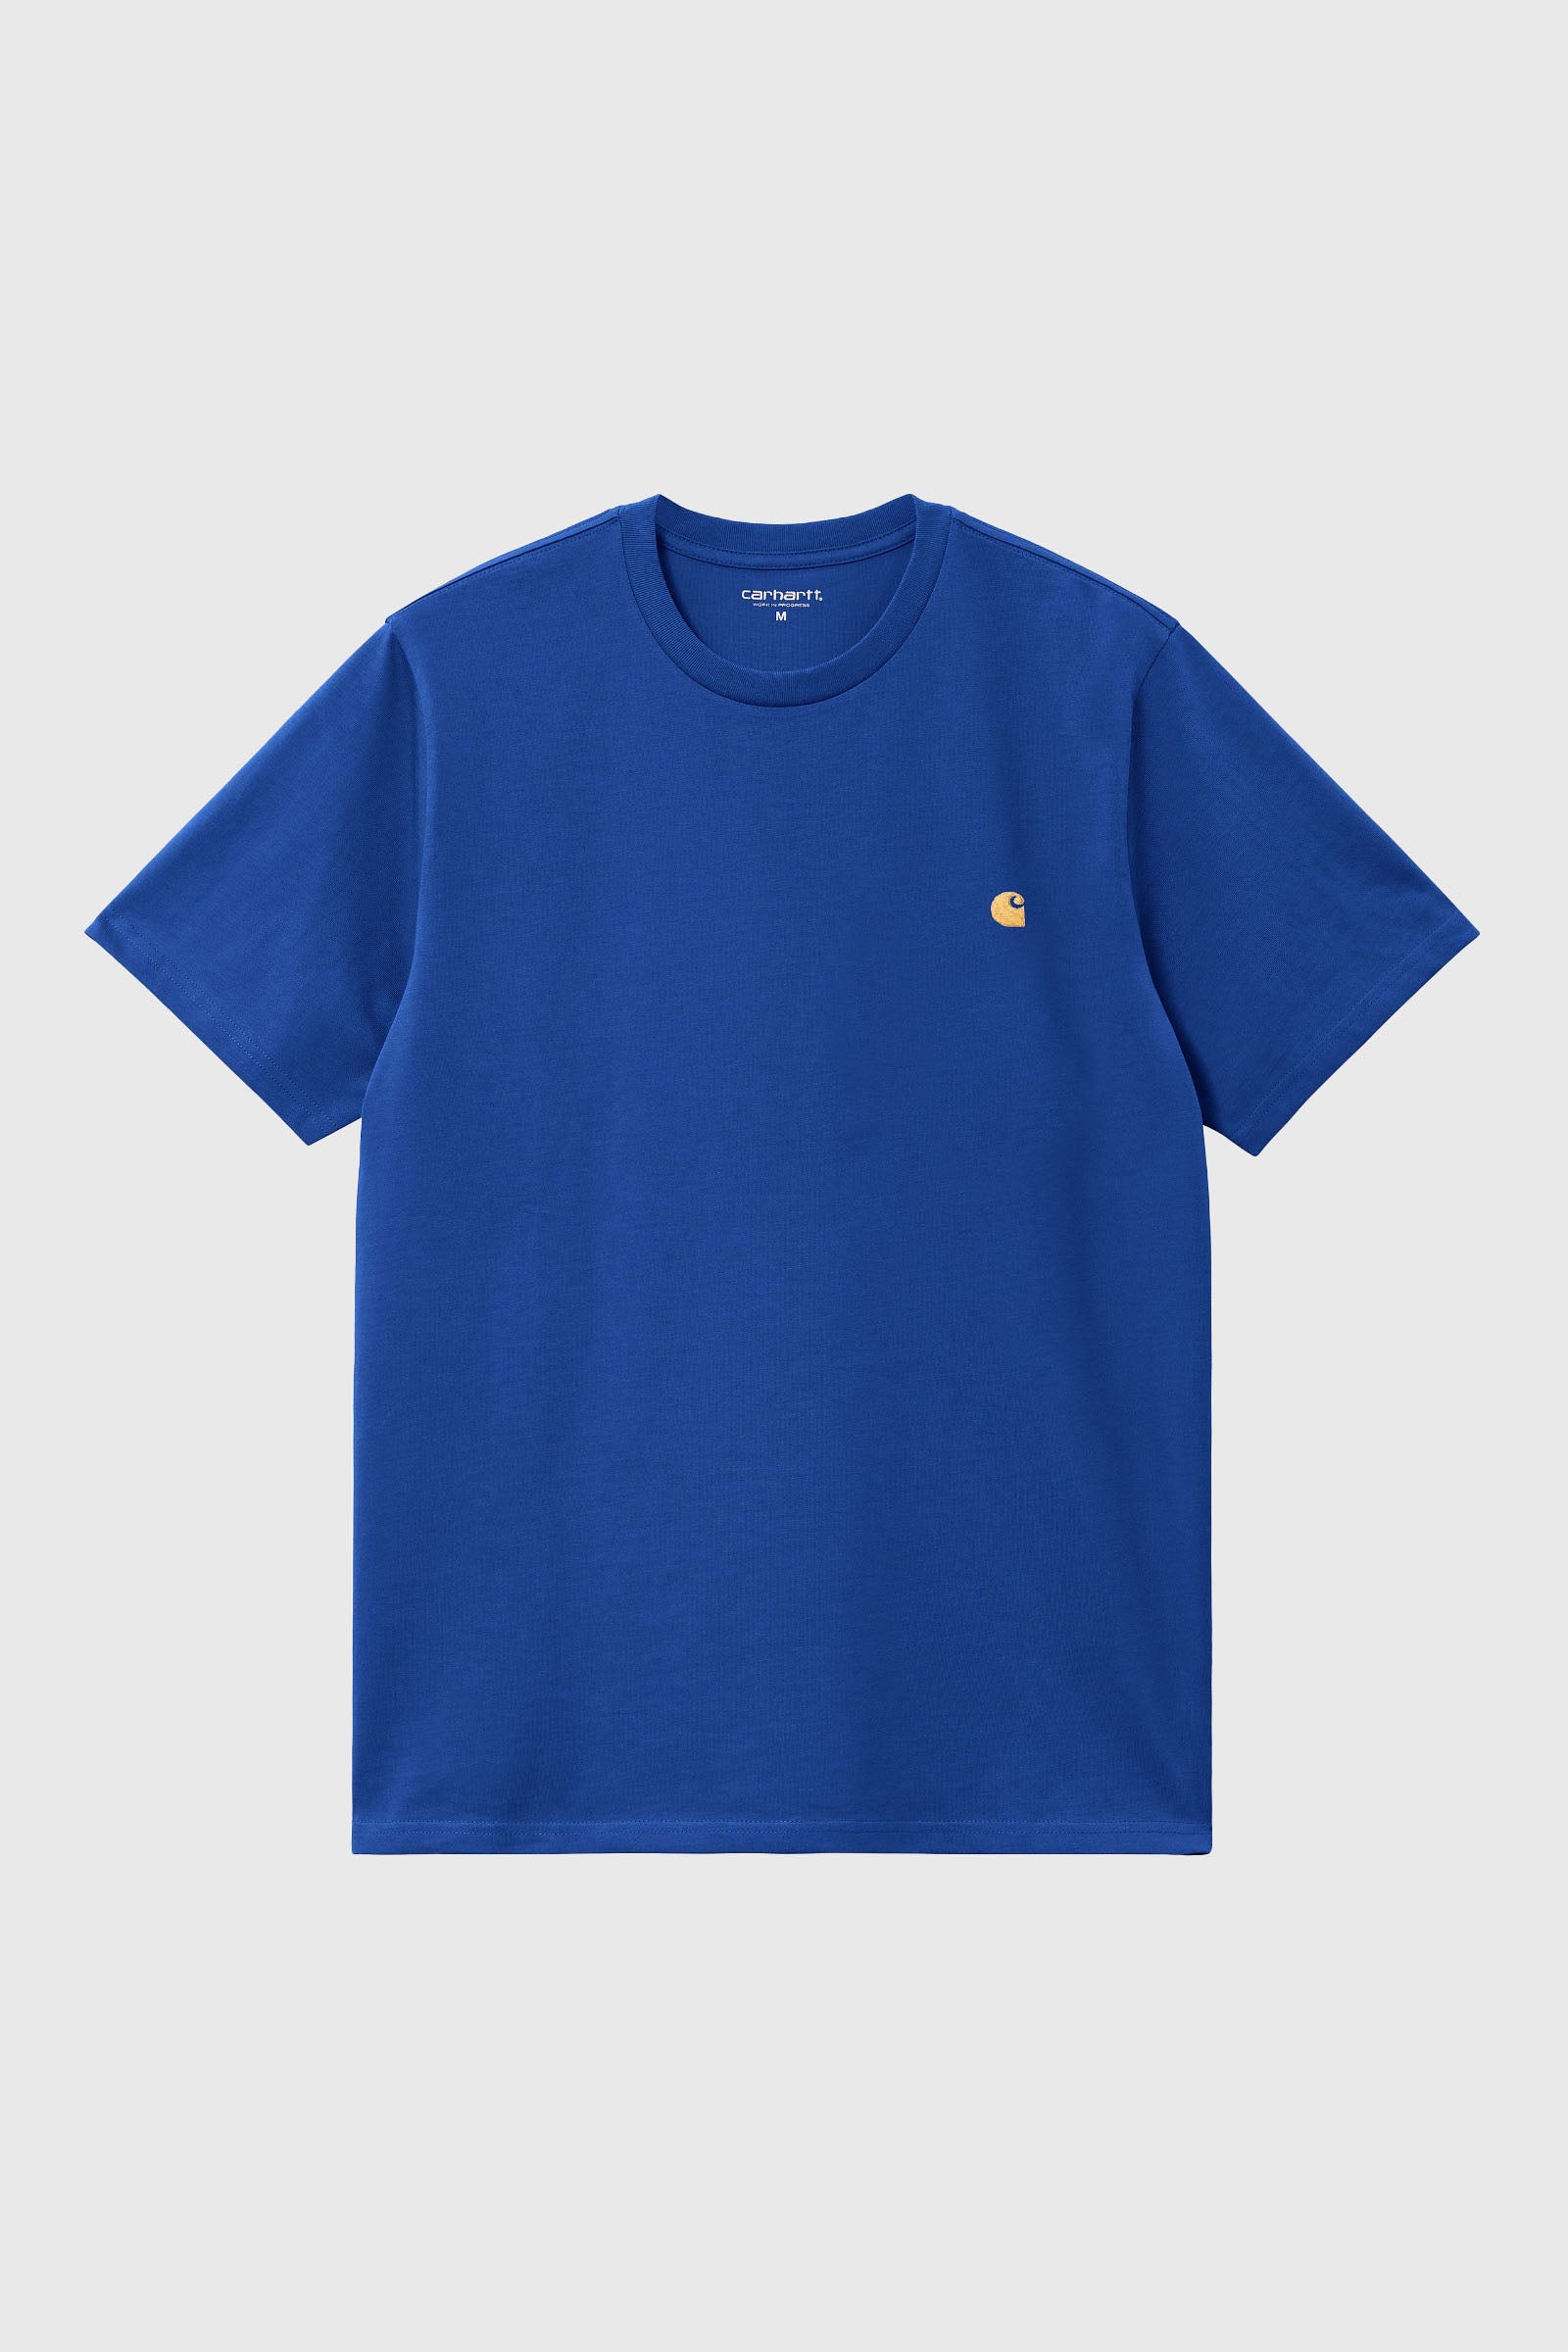 Carhartt WIP T-Shirt S/S Chase Cotone Royal - 1